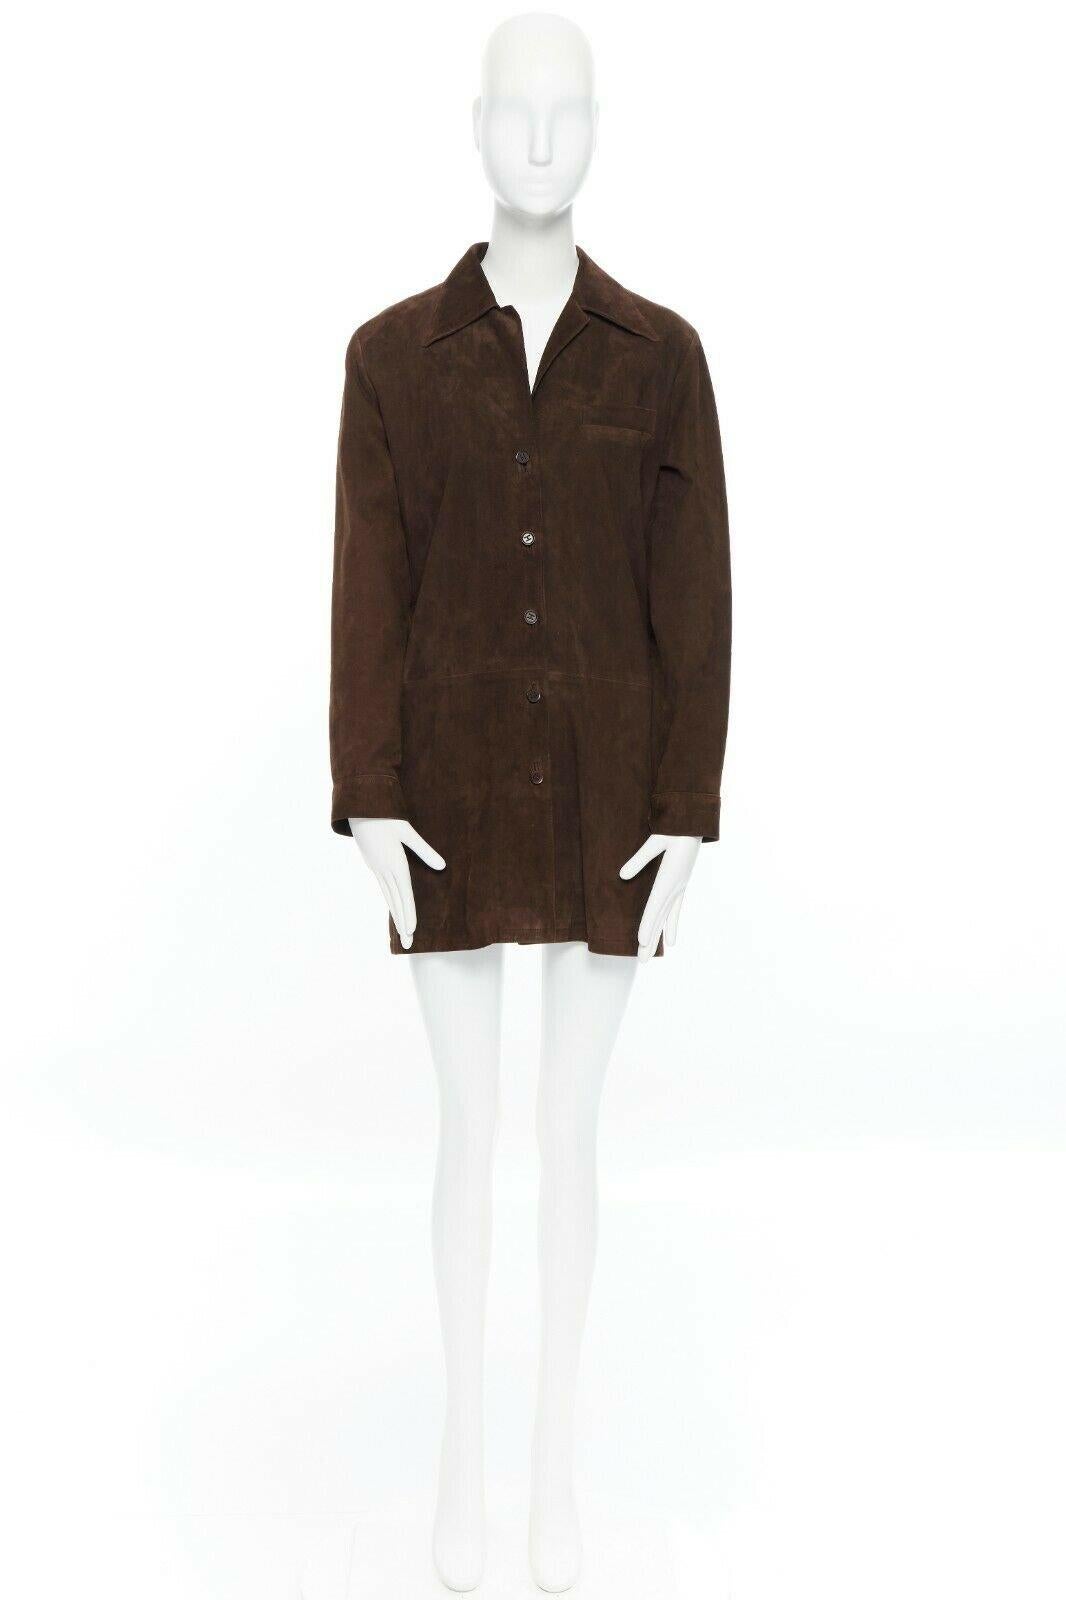 Black HERMES MARTIN MARGIELA vintage brown suede peak spread collar long shirt FR38